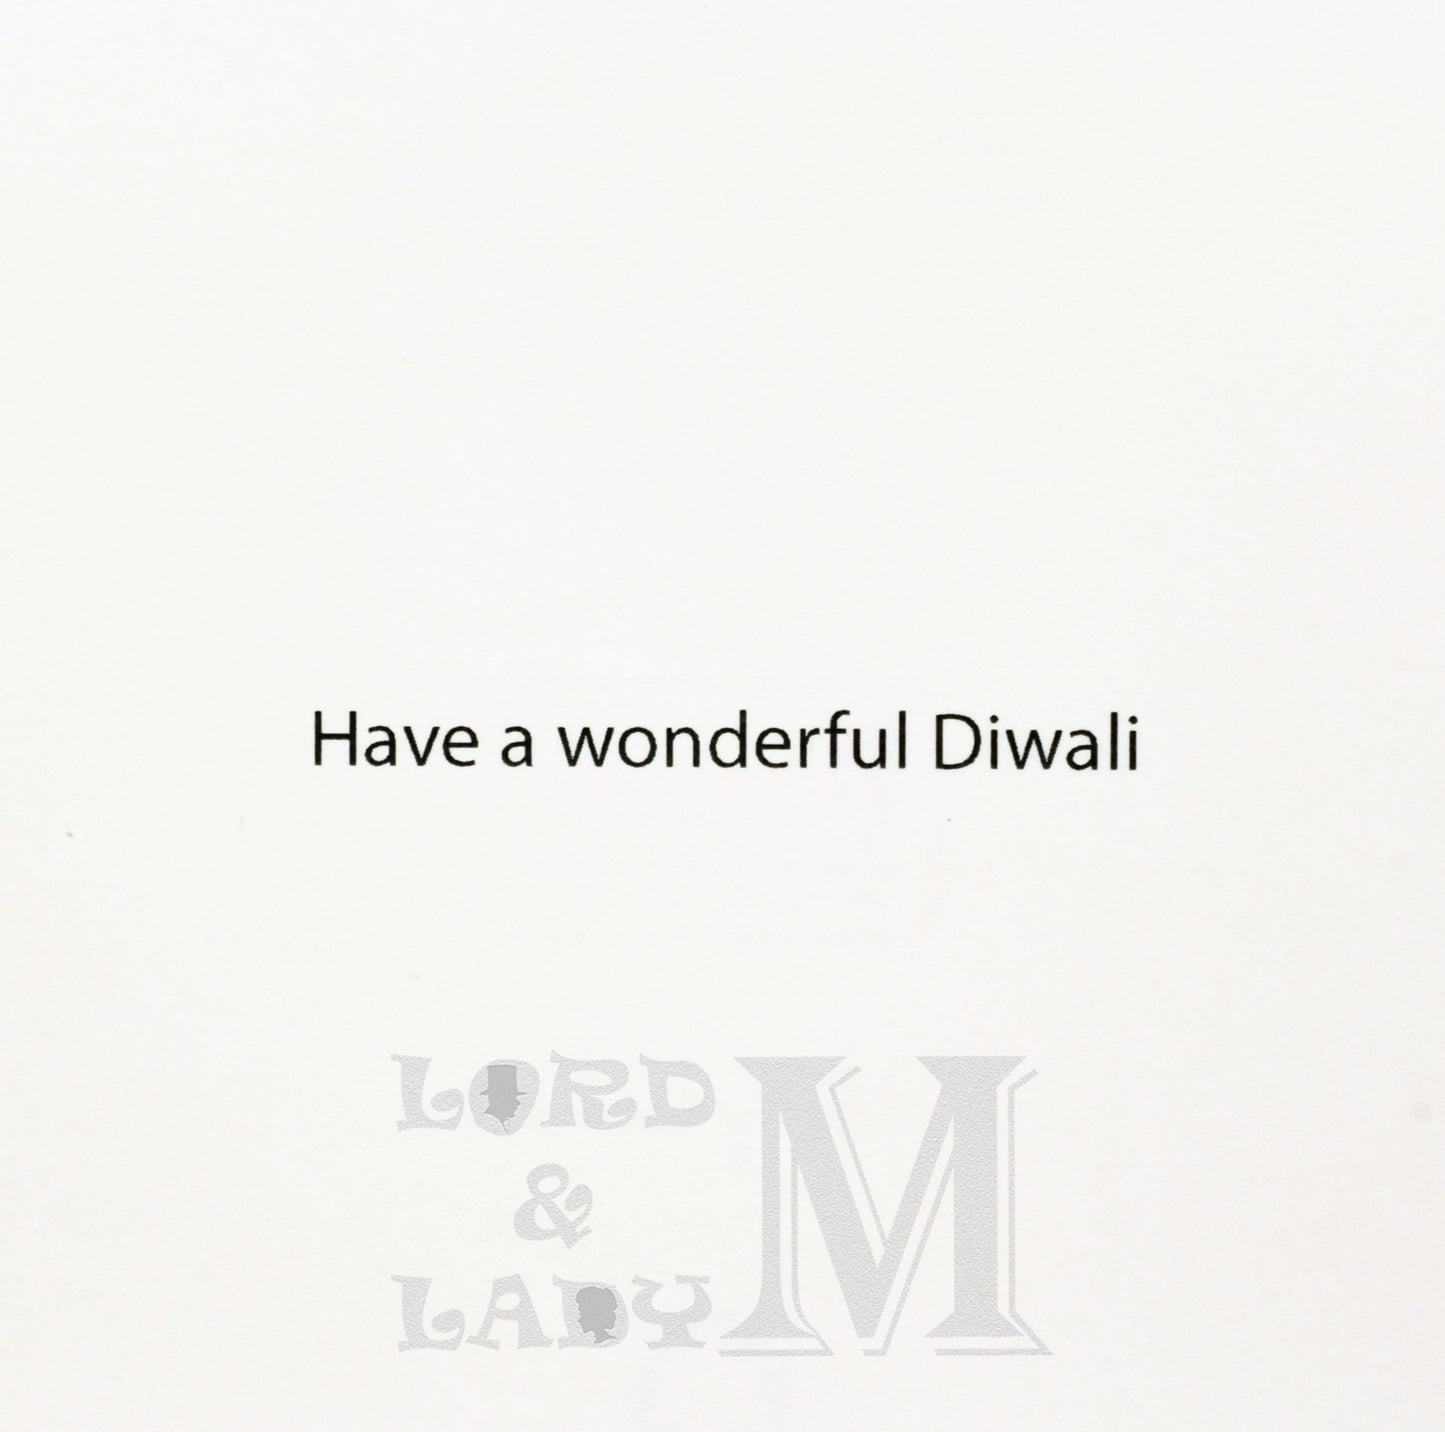 15cm - Diwali Greetings - Red Square Sikh - DV